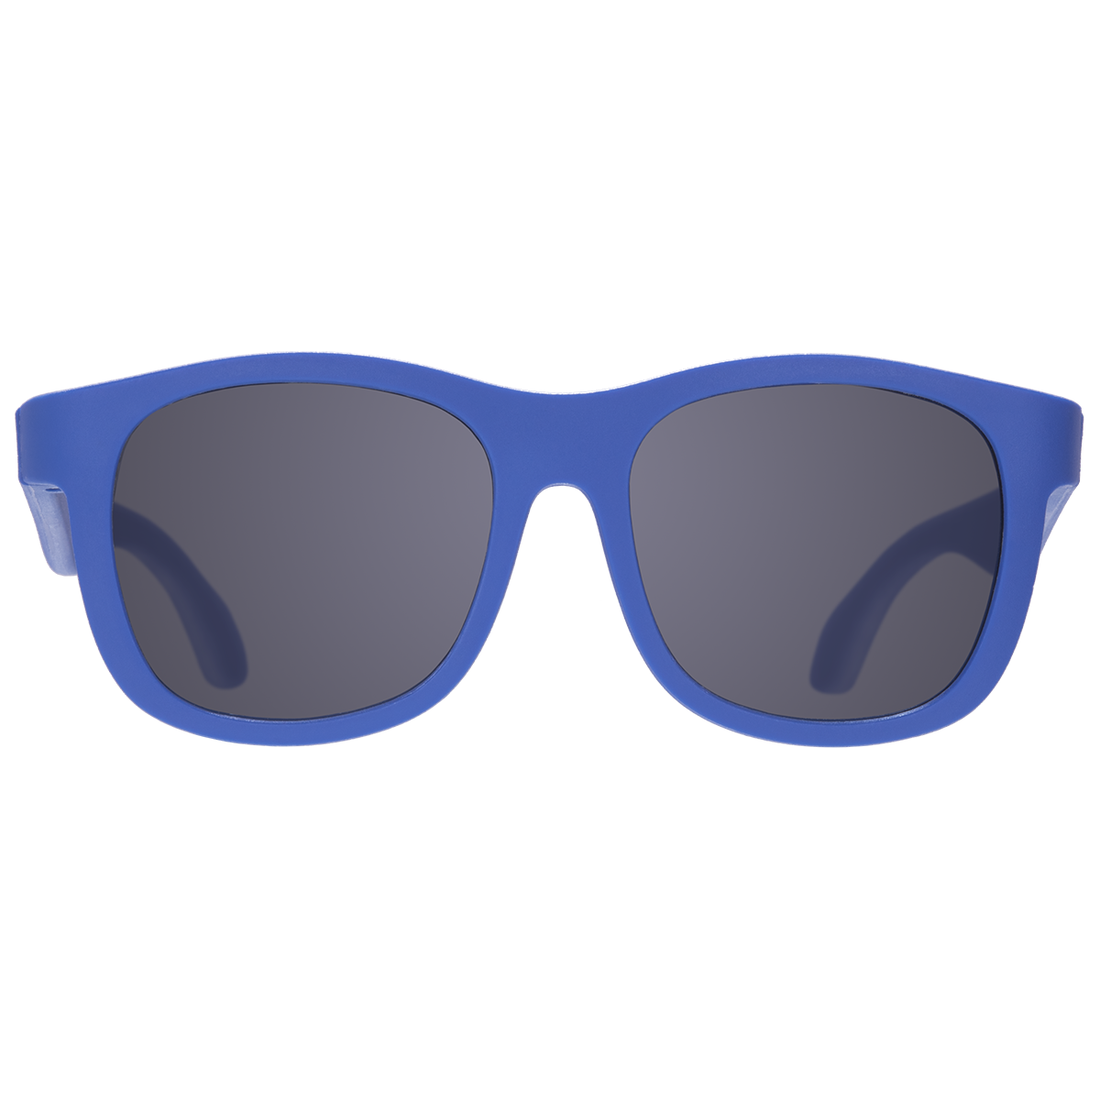 Navigator Kids Sunglasses in Good as Blue